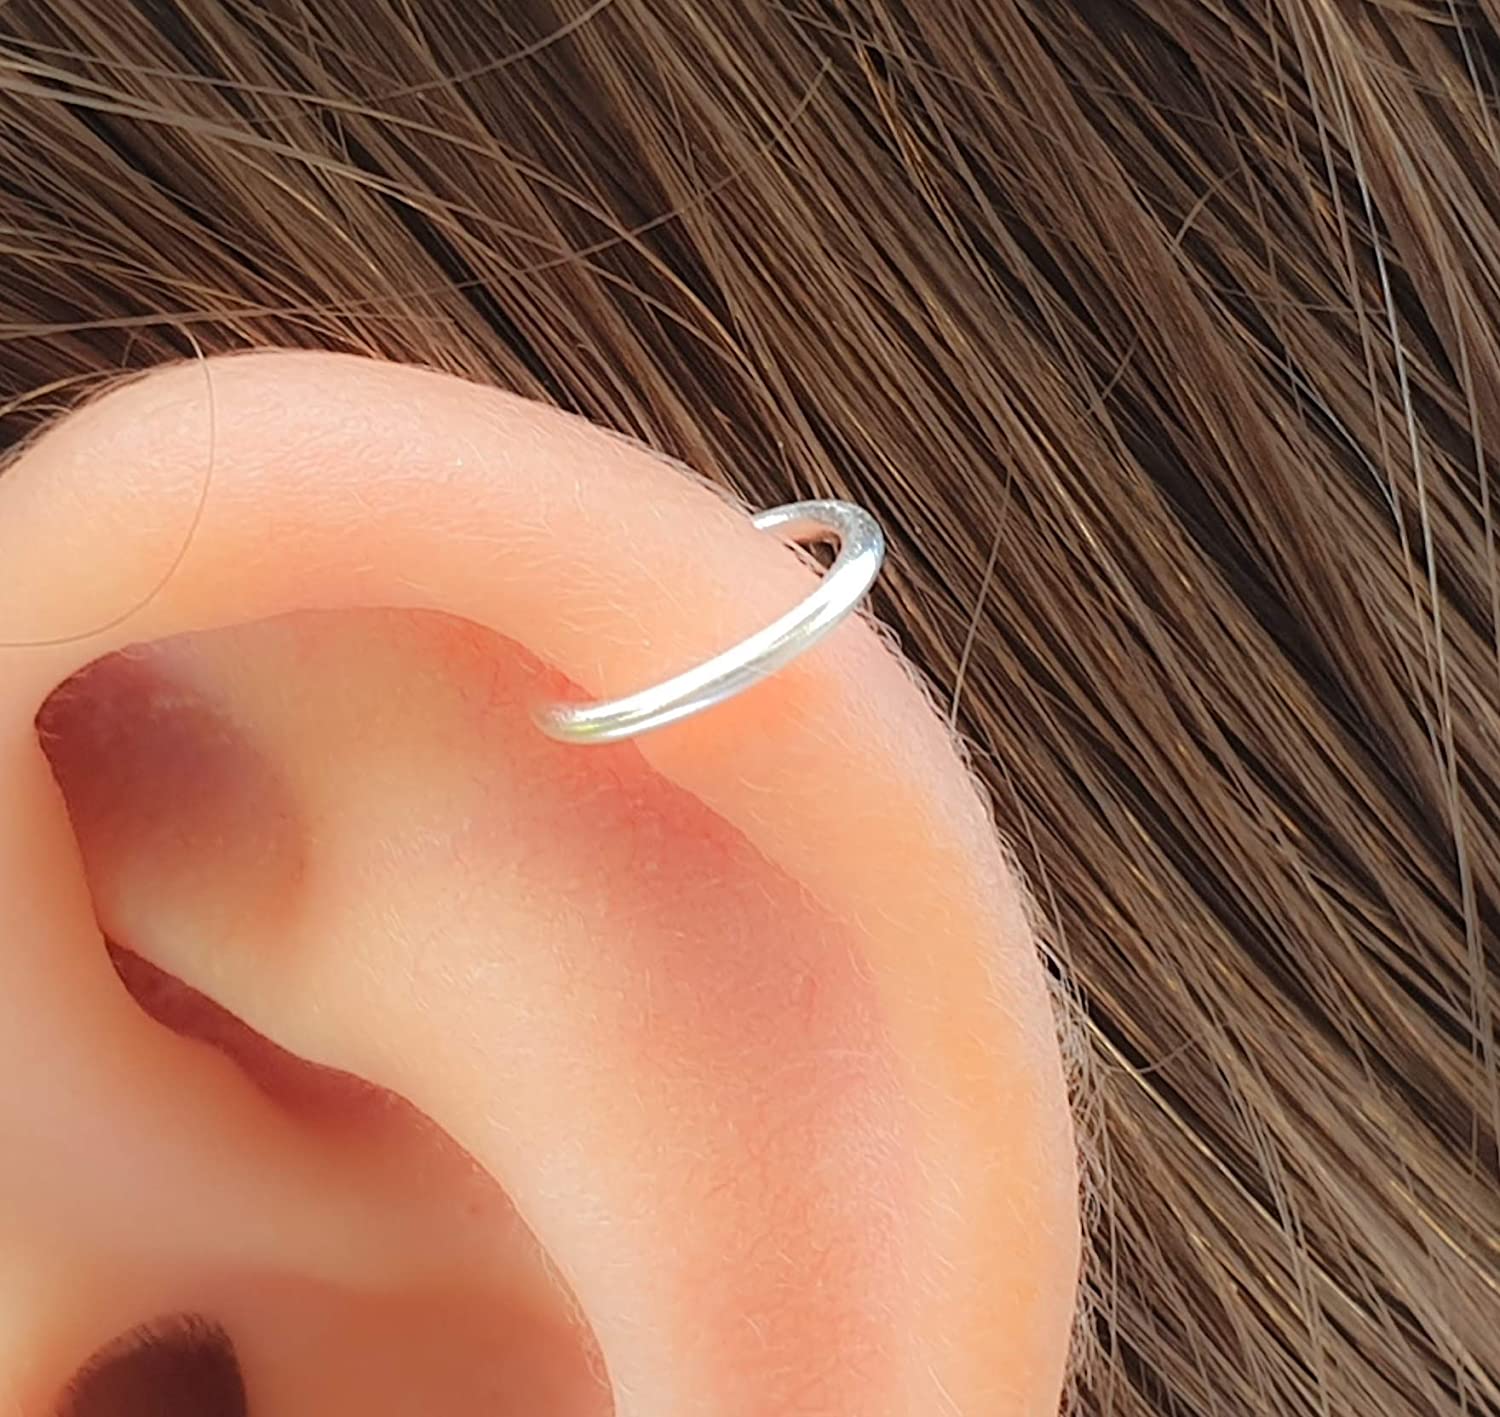 Cartilage Silver Earring, Geometric Silver Helix, Silver Helix Earring, Silver  Helix Ring, Cartilage Piercing, Helix 925 Silver Earring 18g - Etsy | Cartilage  jewelry, Helix earrings, Gold helix earrings